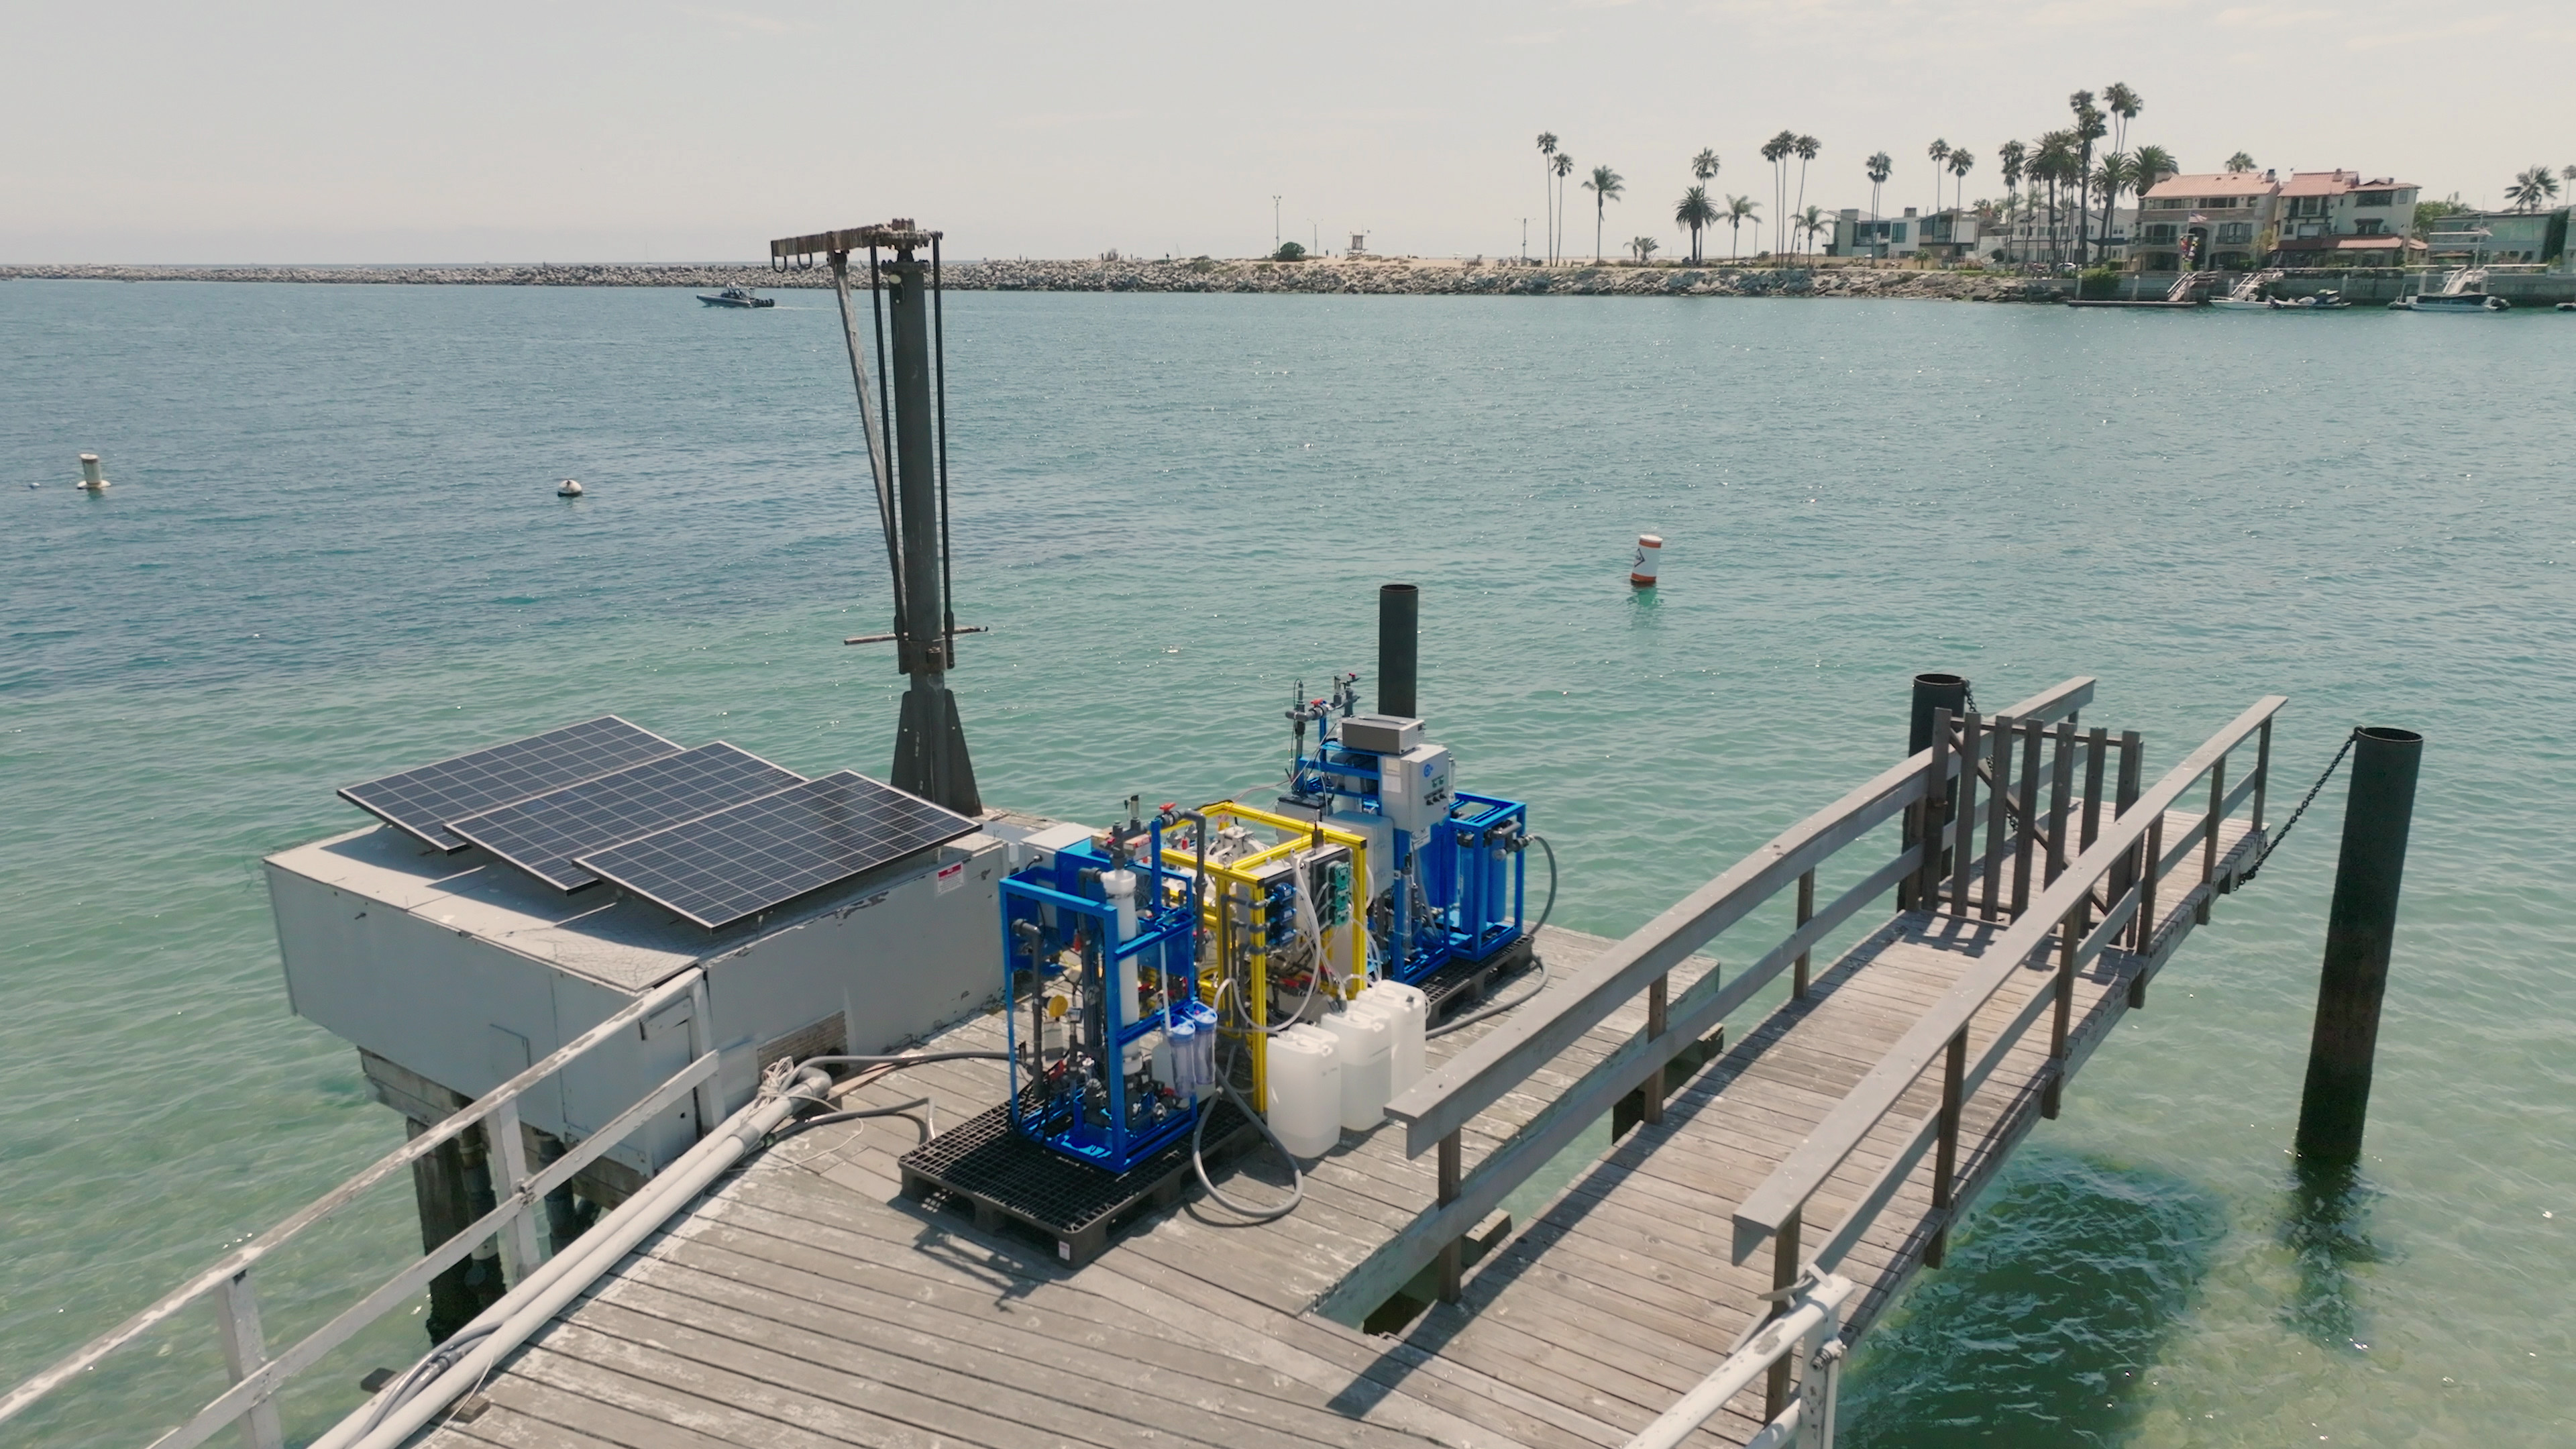 ARPA-E Investor Update Blog Captura pilot system 1 ton capacity newport beach california